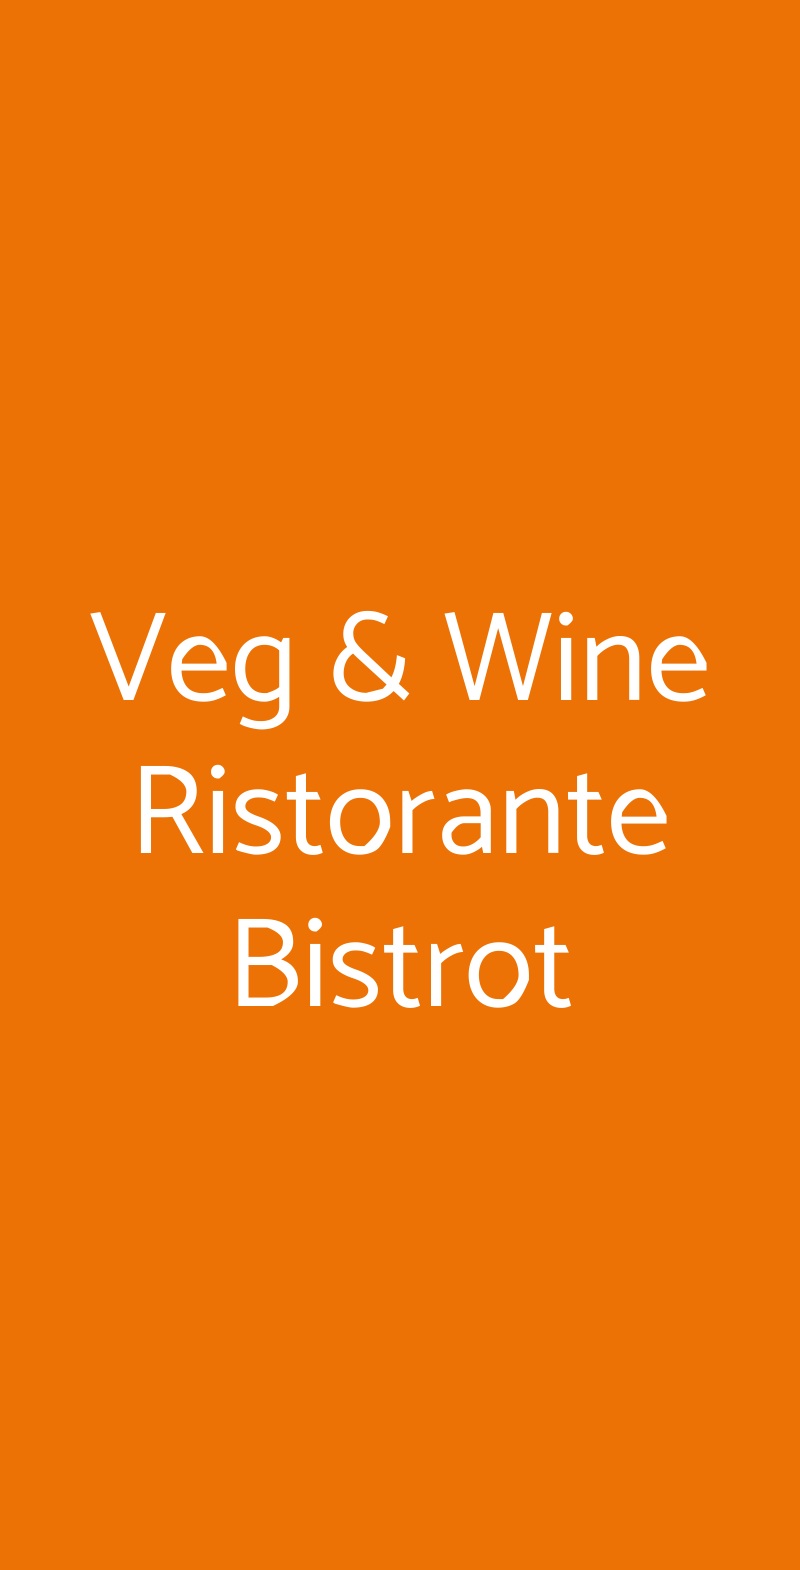 Veg & Wine Ristorante Bistrot Roma menù 1 pagina